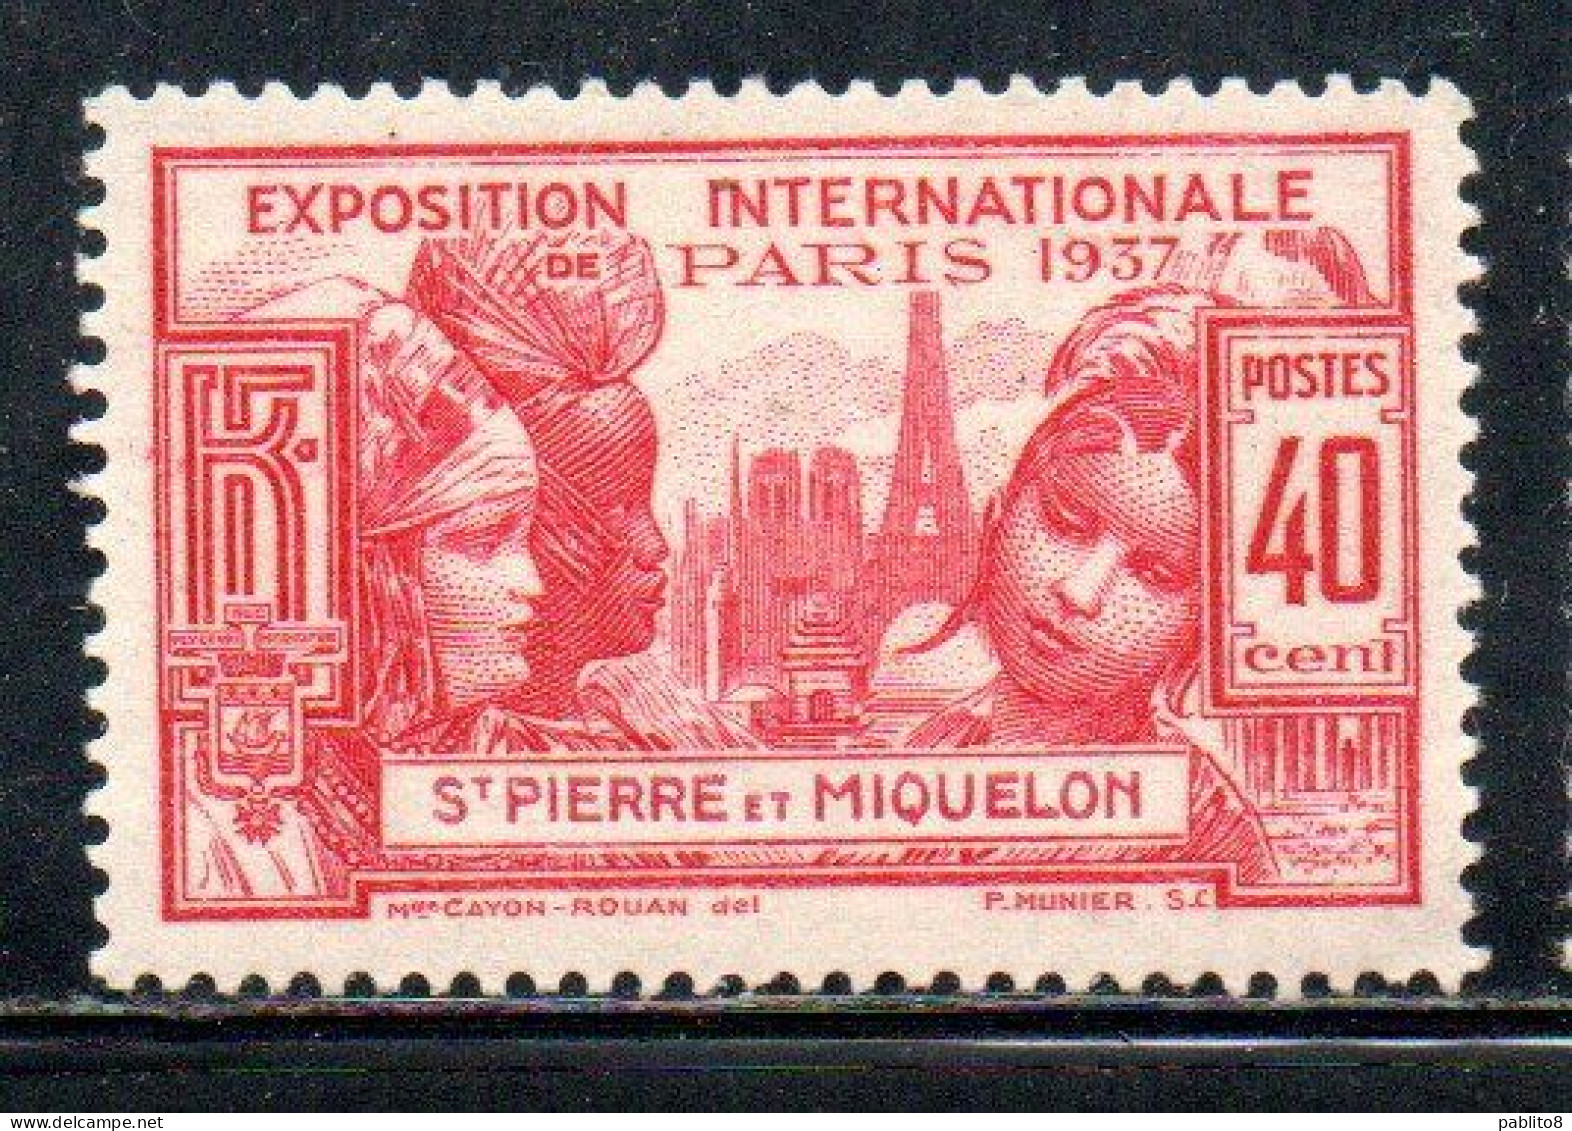 ST. SAINT PIERRE AND ET MIQUELON 1937 PARIS INTERNATIONAL EXPOSITION ISSUE 40c MLH - Ongebruikt